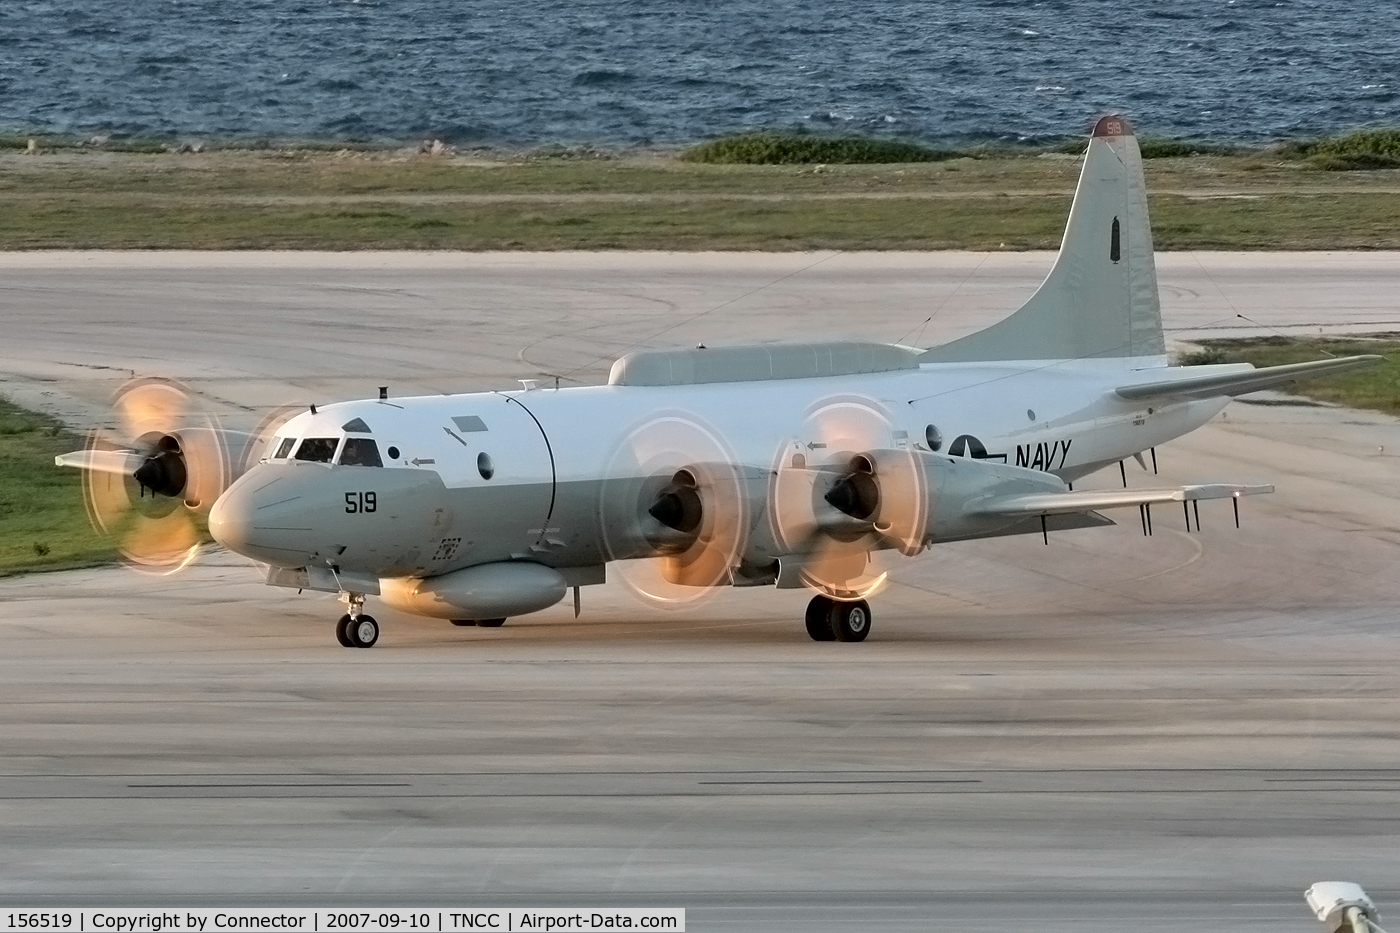 156519, Lockheed EP-3E Aries II C/N 285A-5513, Arriving just before sunset.